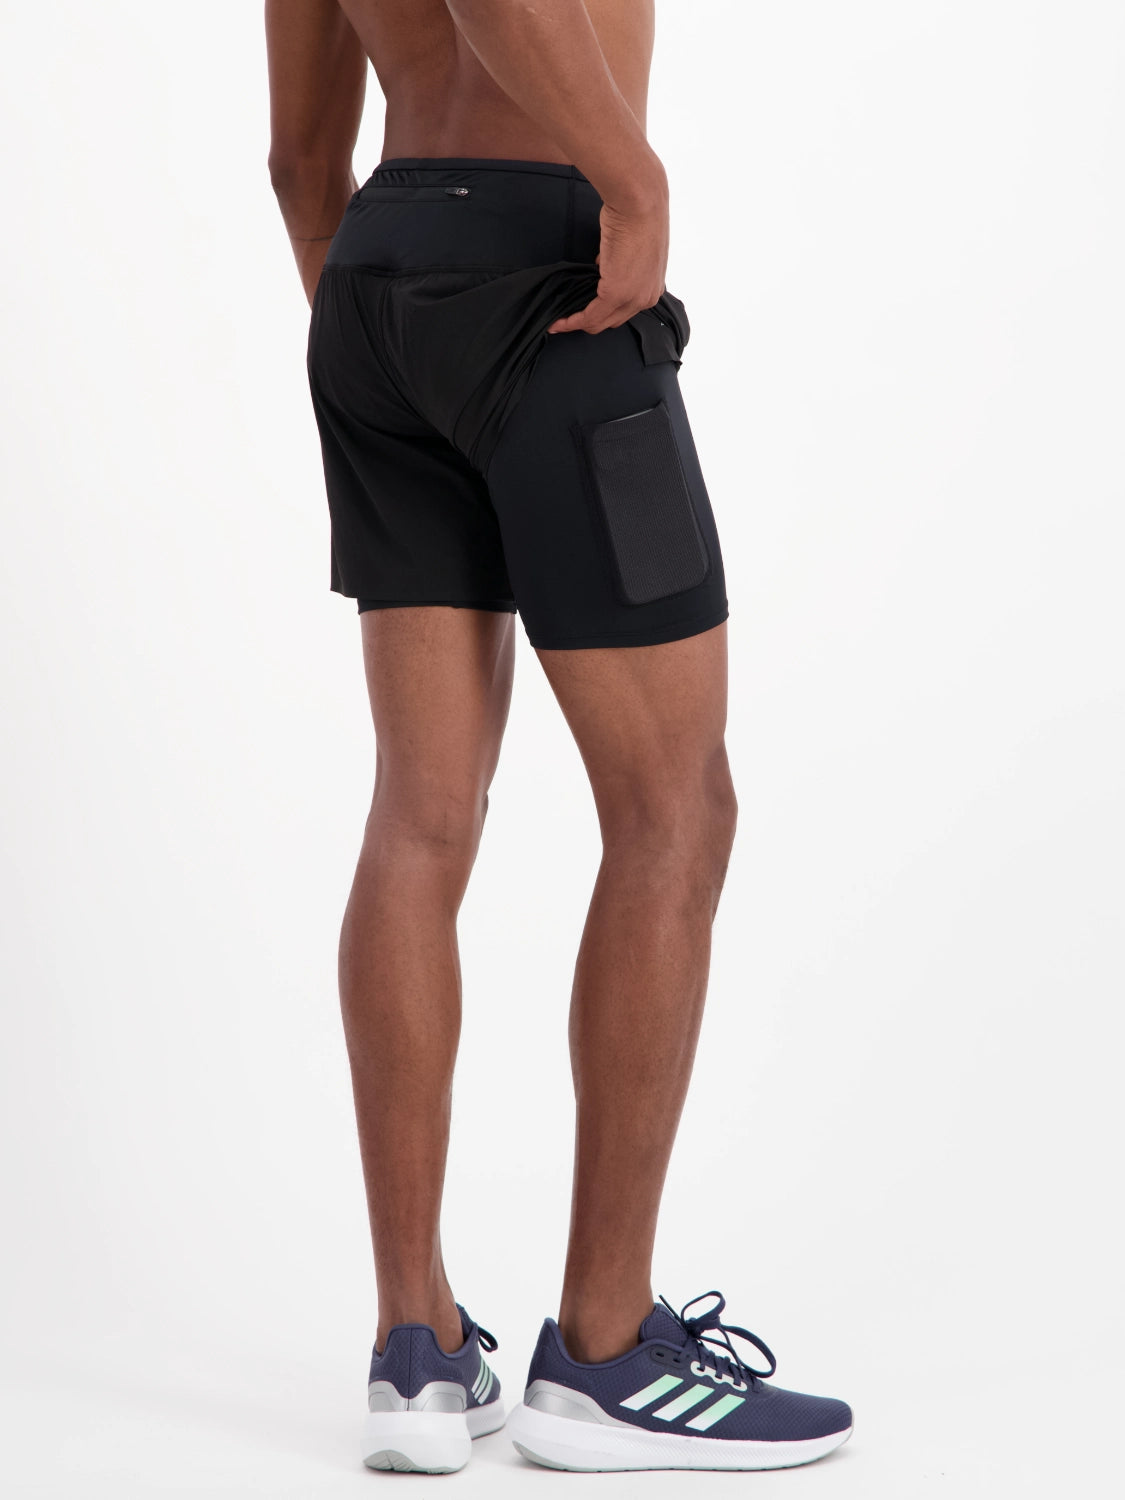 Onder Ultra Men's 2-in-1 Shorts and Bib Shorts Black